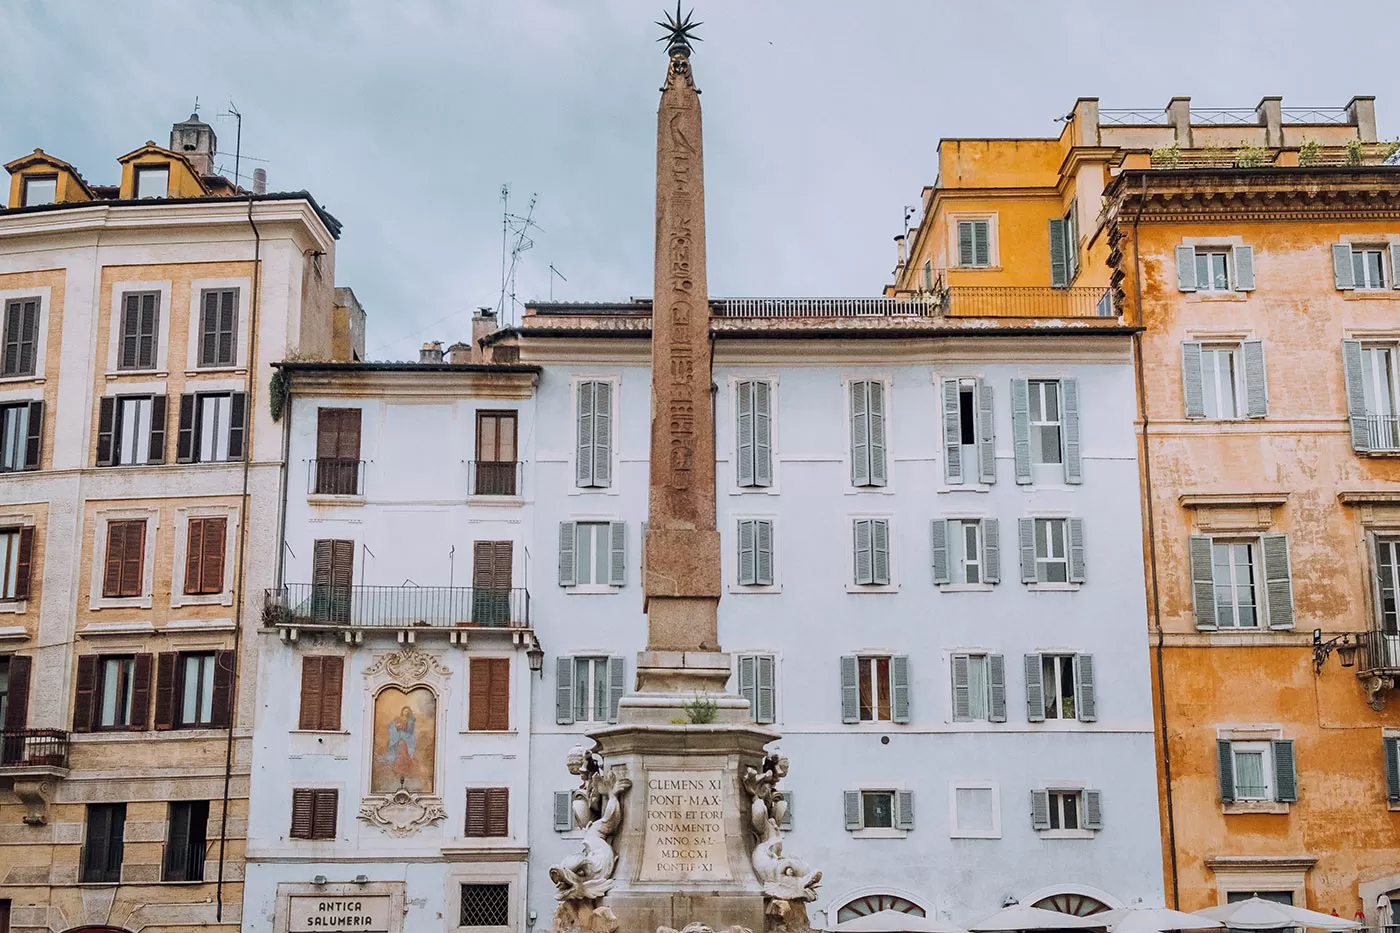 Hotels near the Pantheon Rome - Colourful buildings in Piazza della Rotonda